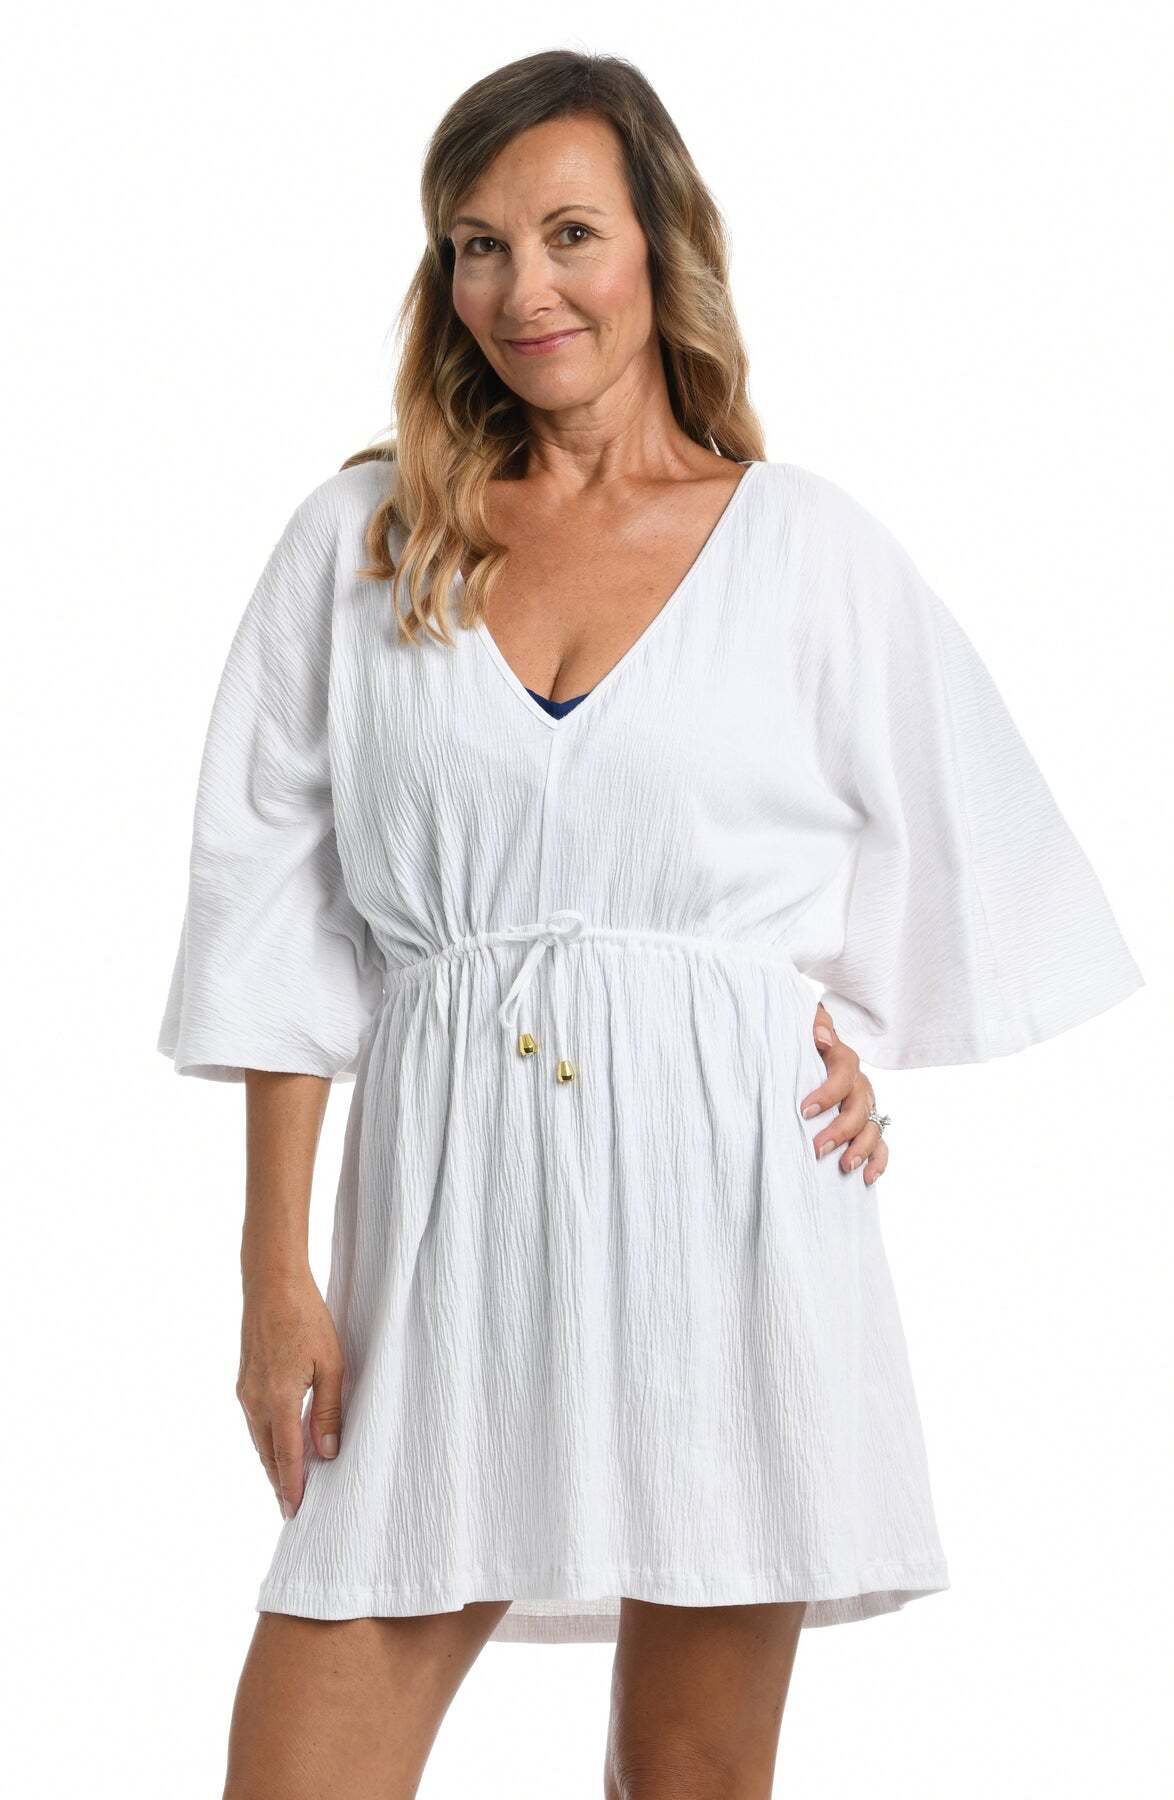 Maxine Women's Small White Kimono Cover Up Tunic